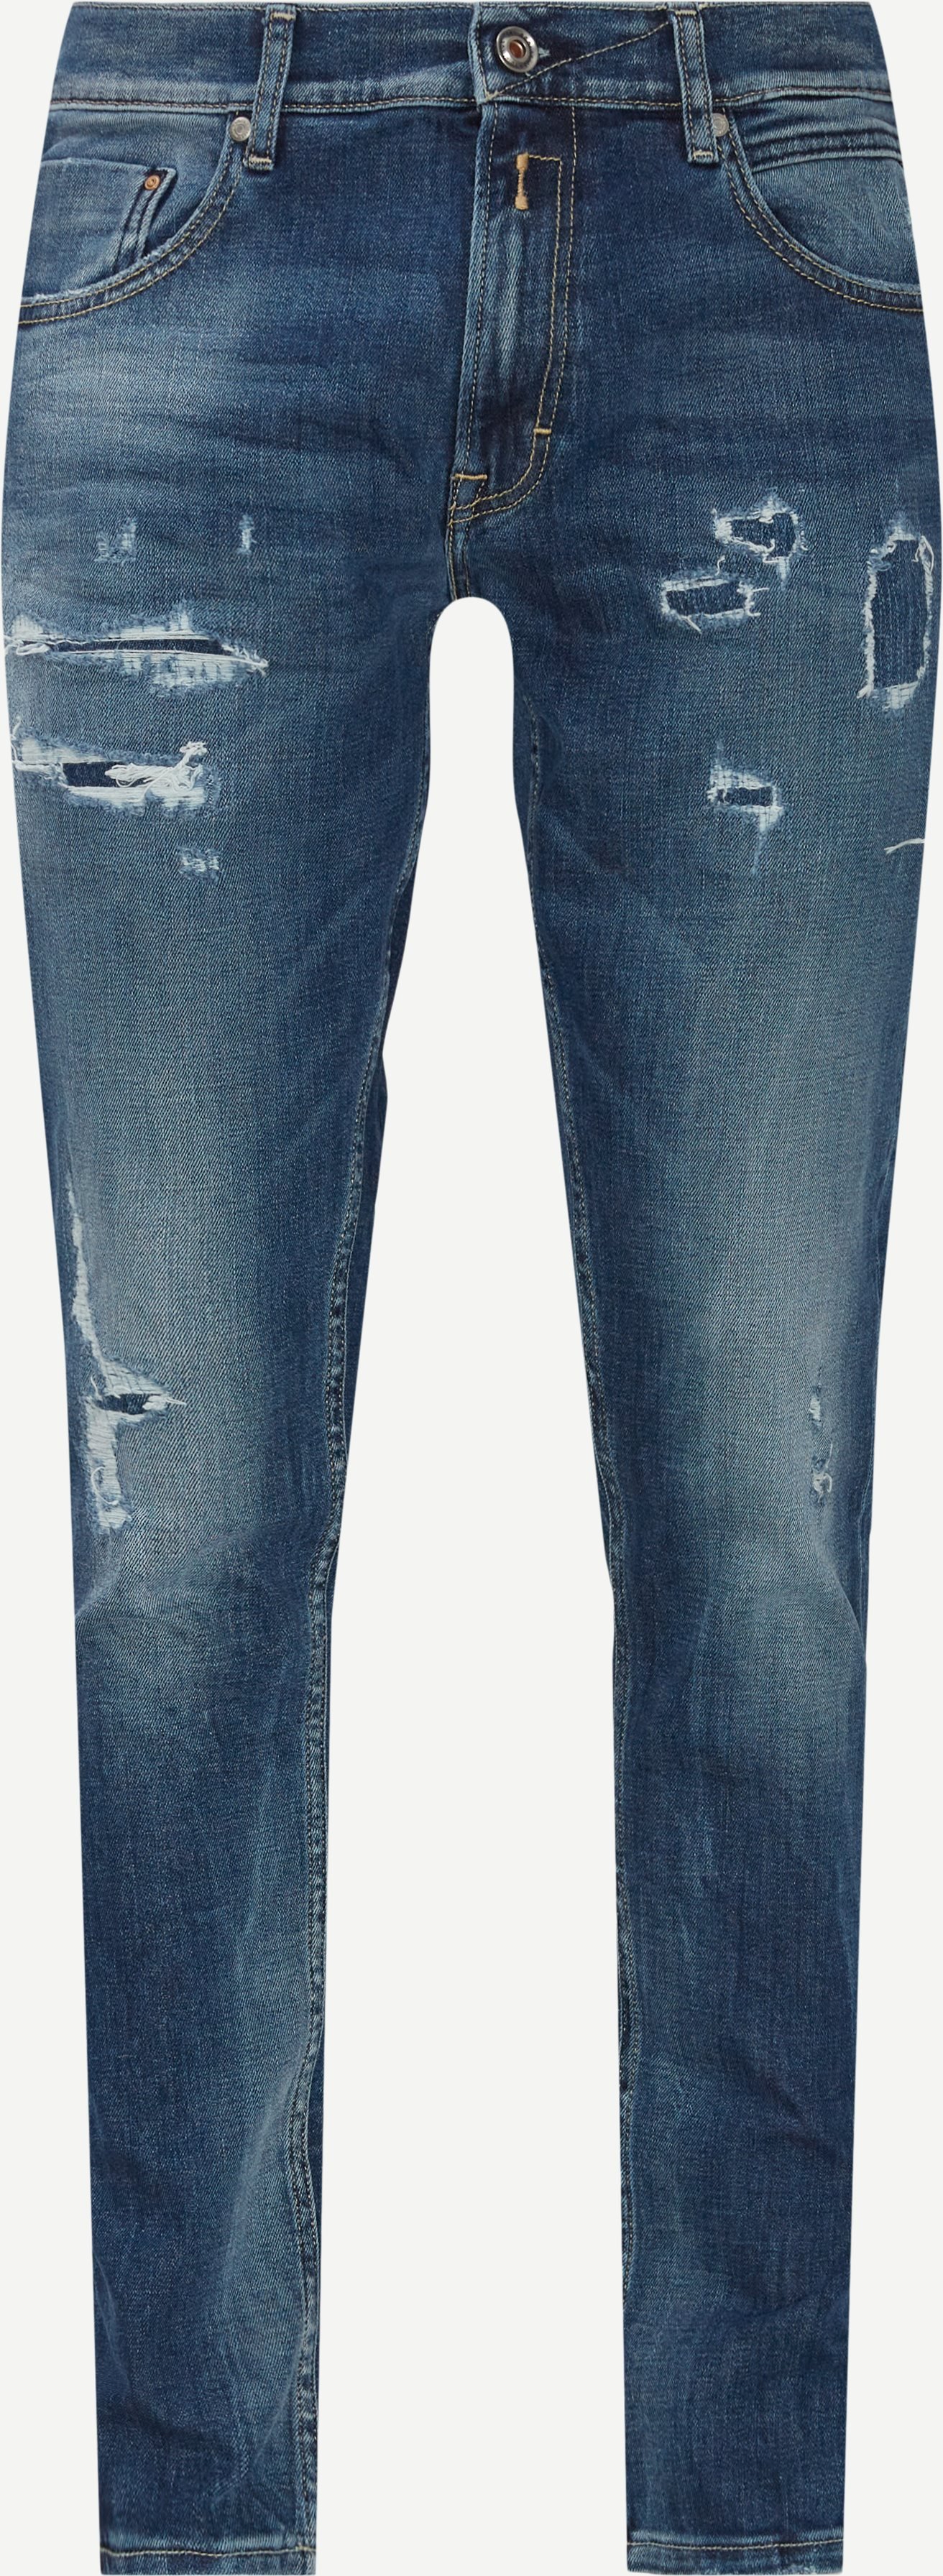 M1021E Broken Edge Jeans - Jeans - Tapered fit - Denim